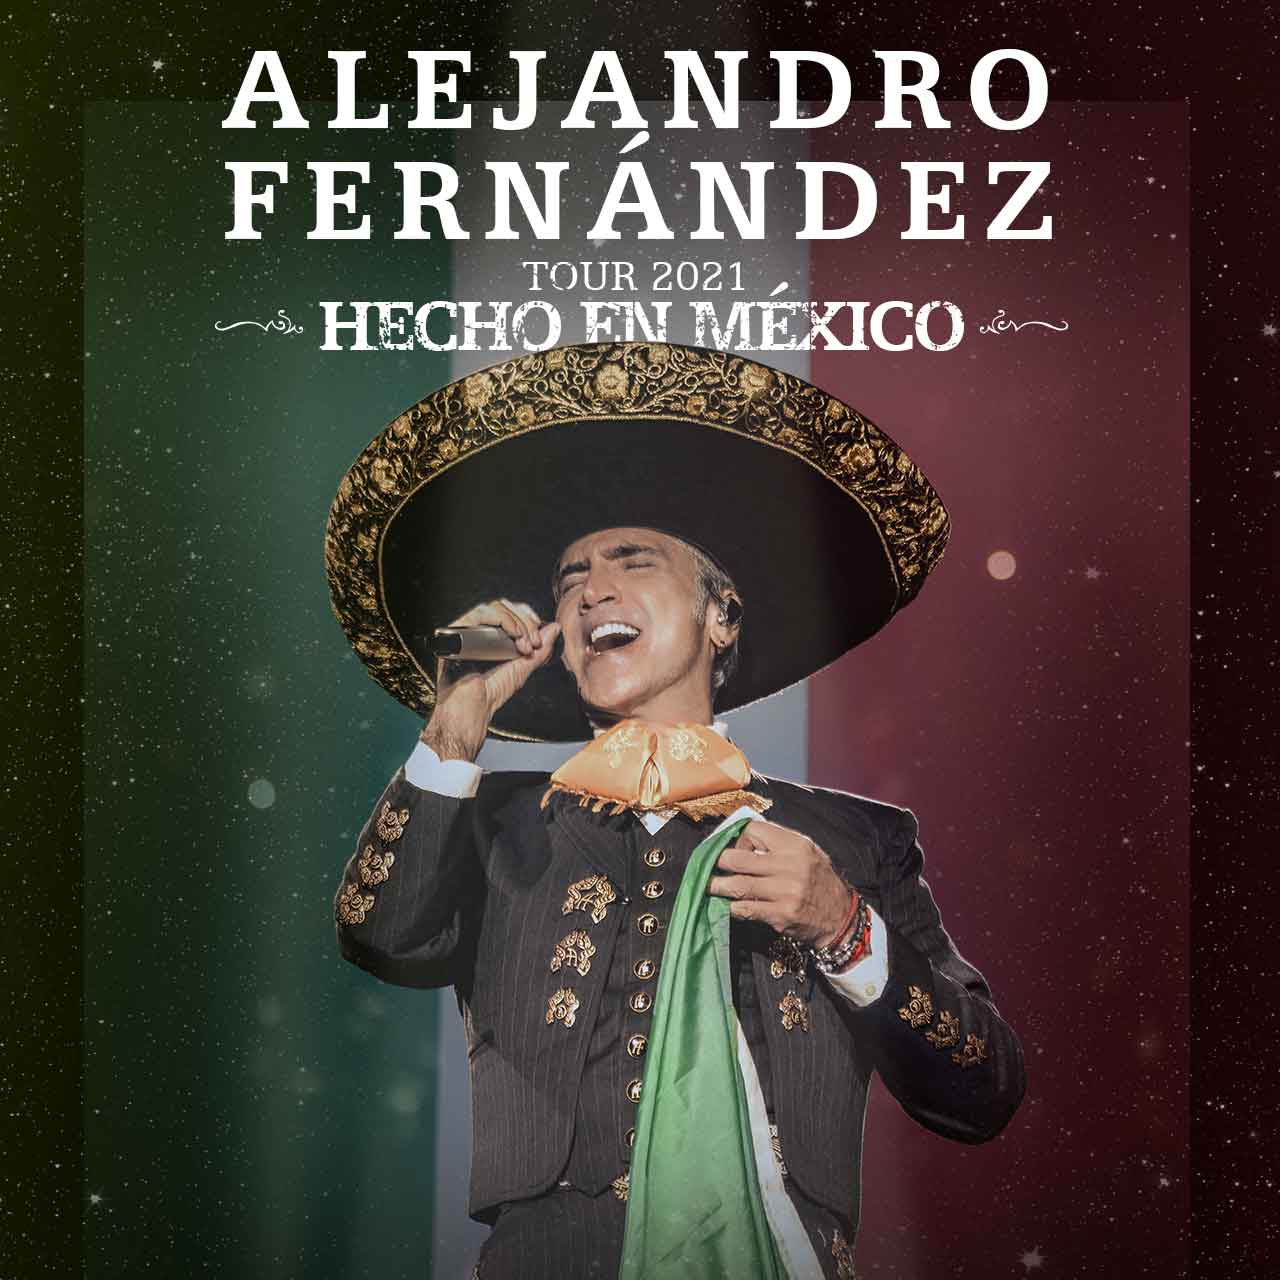 Alejandro Fernandez : Alejandro Fernandez S Fall Tour Headed To Allstate Arena Chicago Sun Times / Grandes exitos a la manera de alejandro fernández (1994).